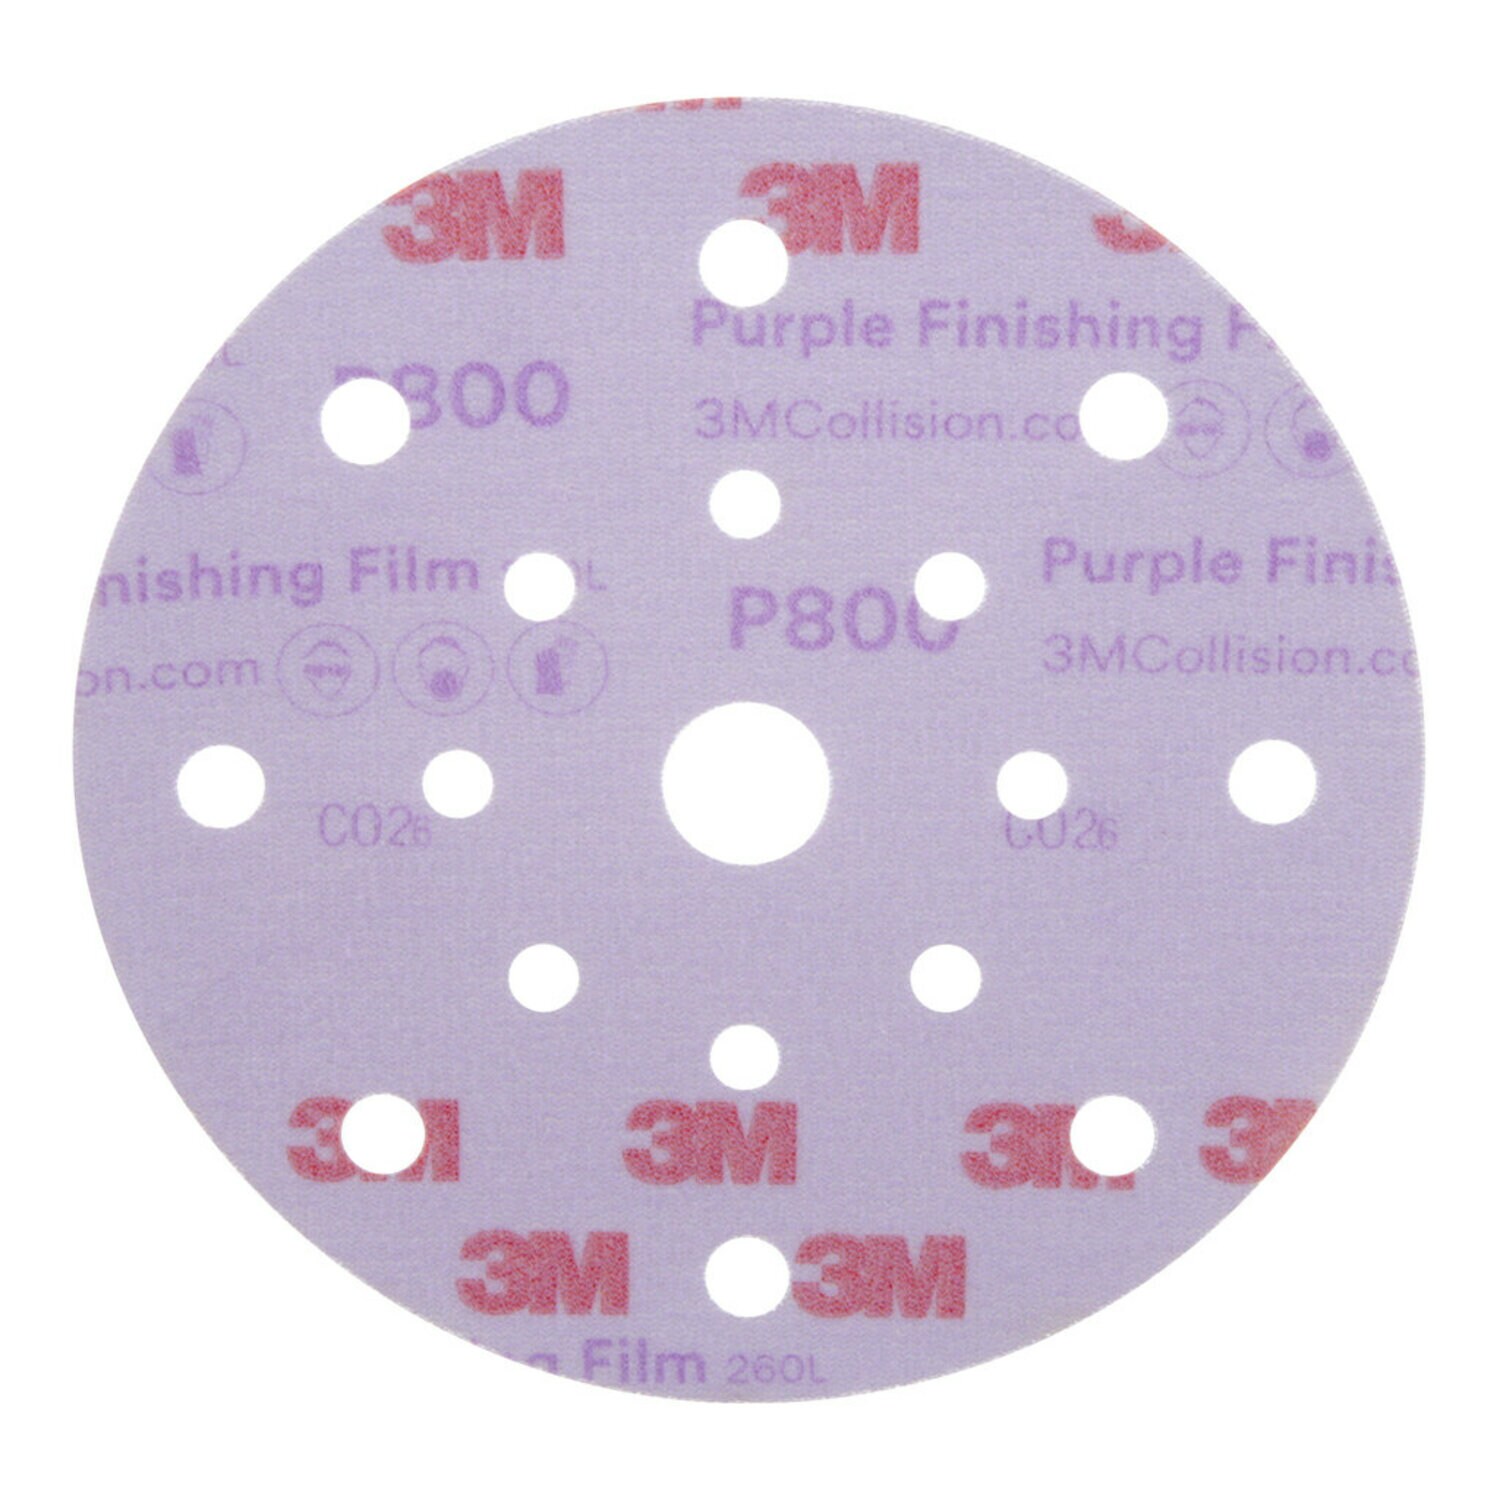 7100122797 - 3M Hookit Purple Finishing Film Abrasive Disc 260L, 34781, 6 in, Dust
Free, P800, 50 Discs/Carton, 4 Cartons/Case